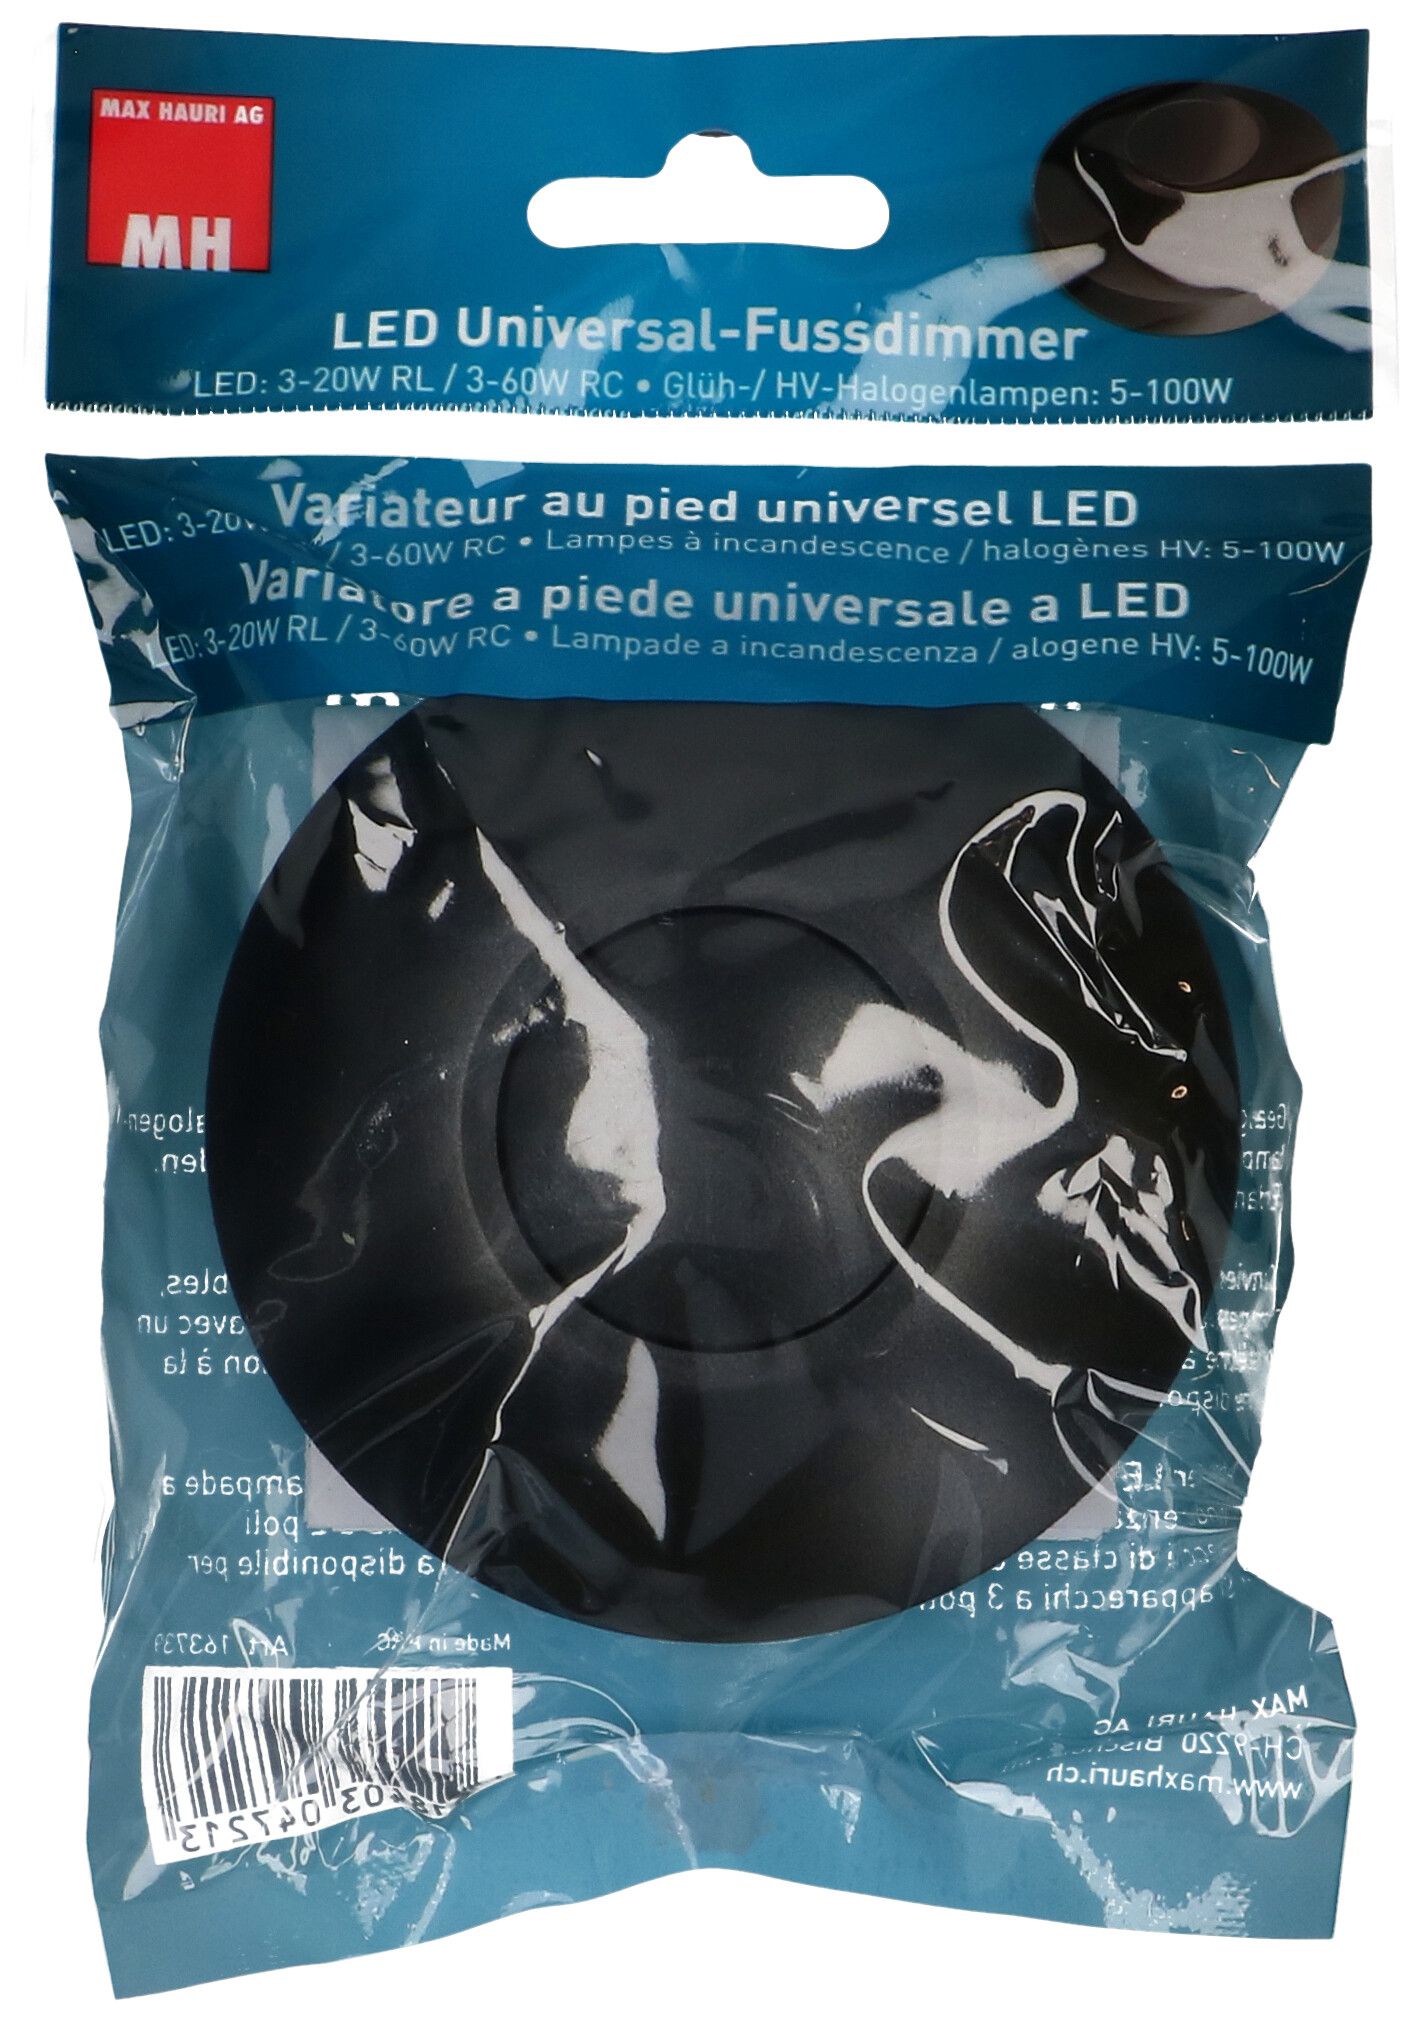 LED-Universal-Fussdimmer schwarz